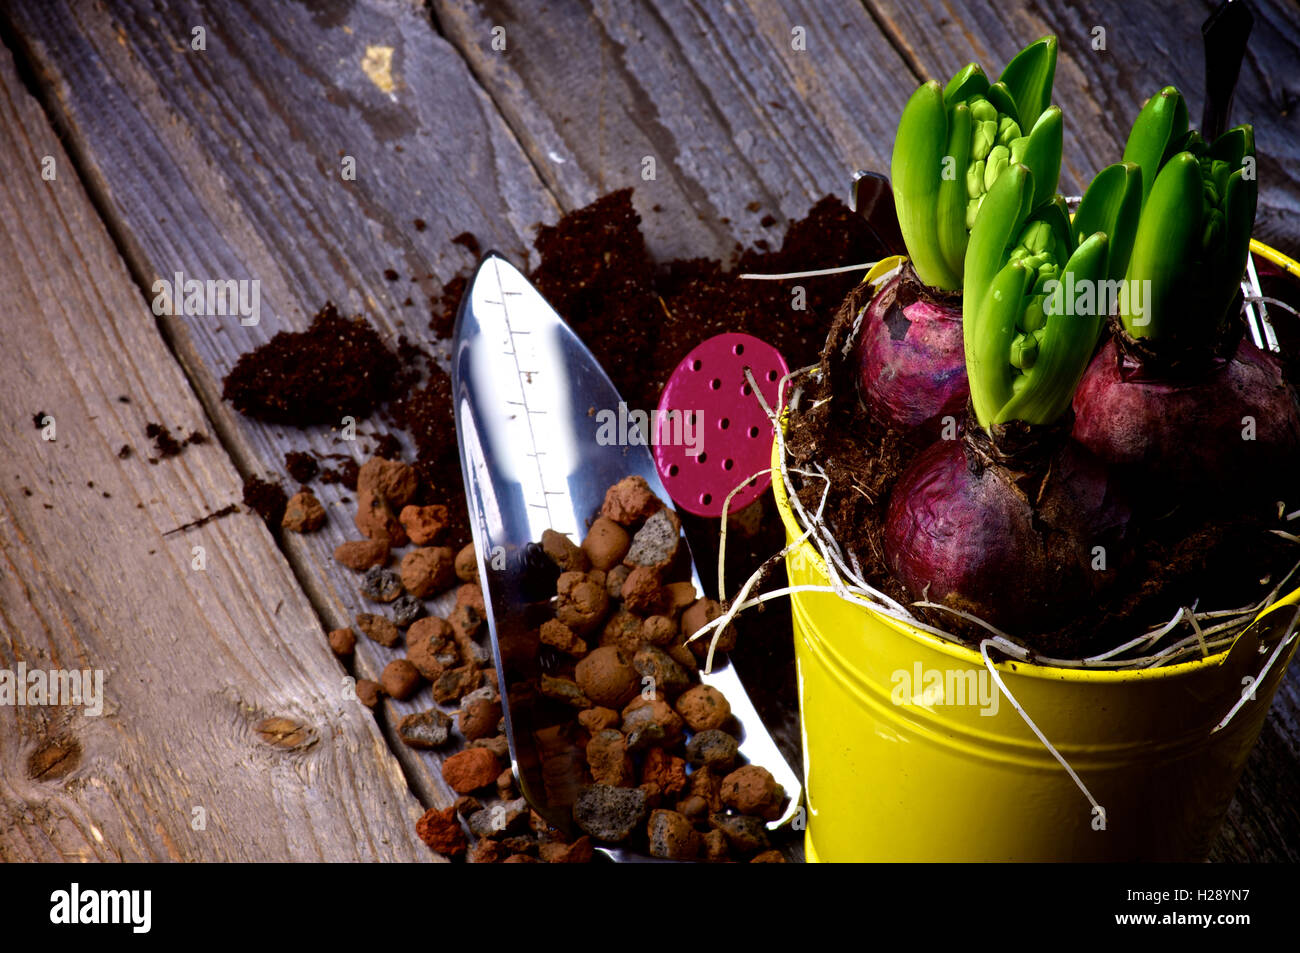 Planting Hyacinth Bulbs Stock Photo